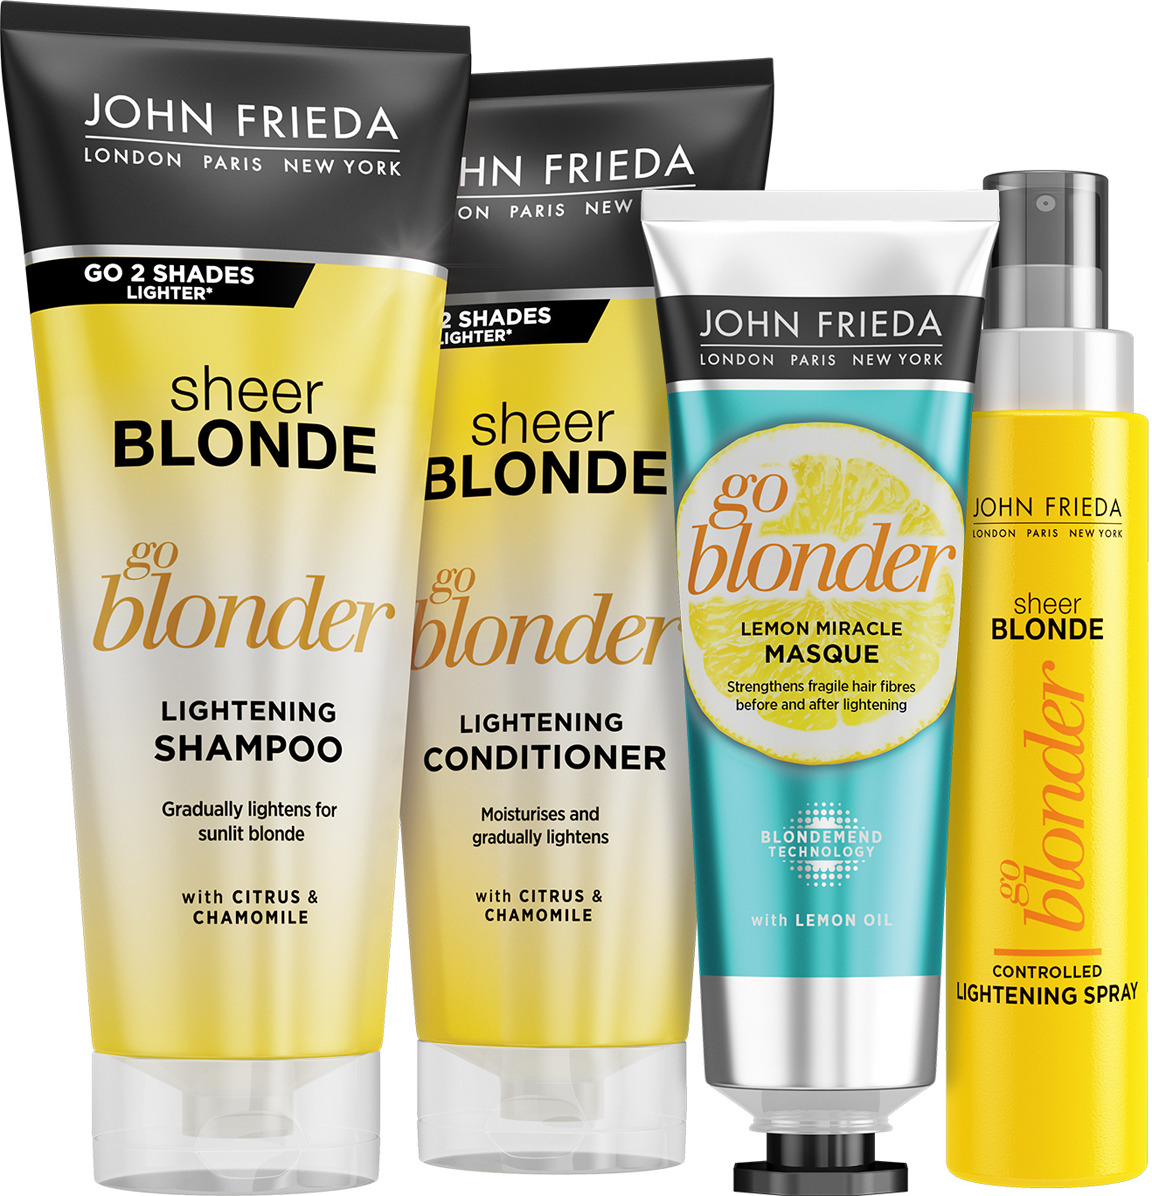 Sheer blonde. Шампунь John Frieda blonde. John Frieda go blonder маска. John Frieda go blonder шампунь.